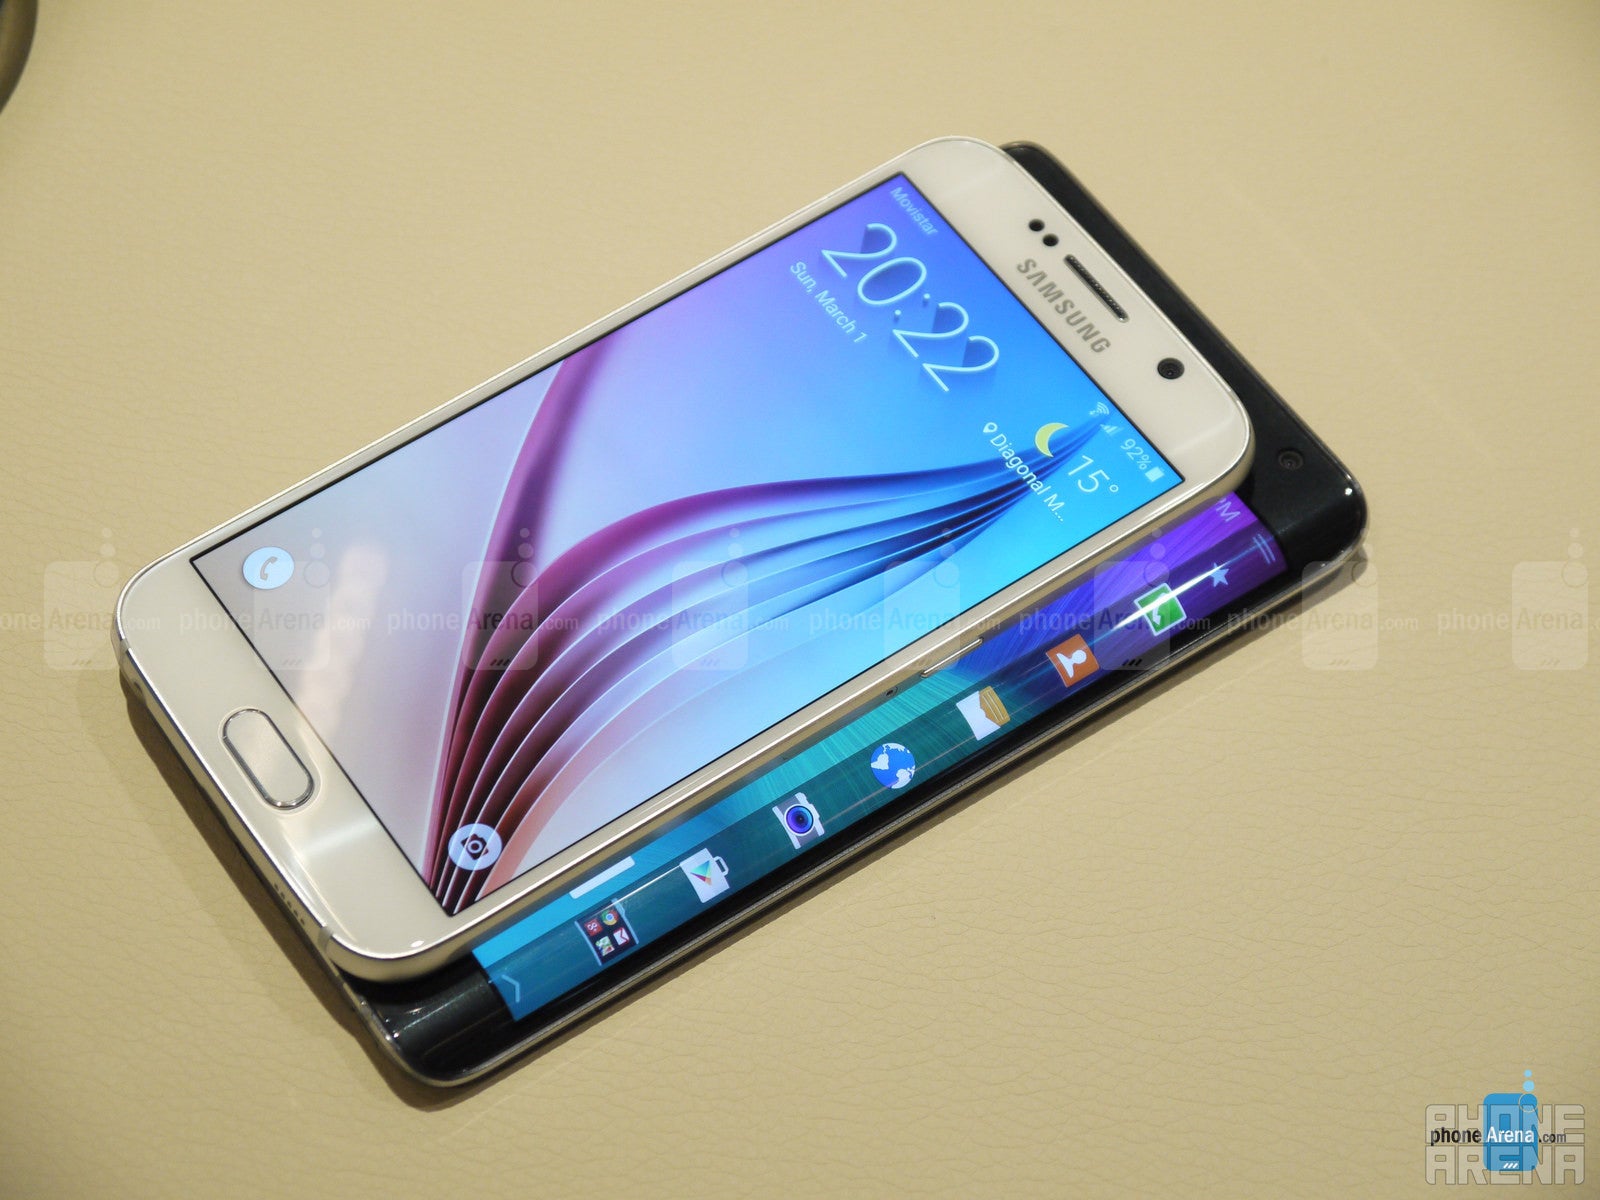 Samsung Galaxy S6 vs Galaxy Note Edge: first look